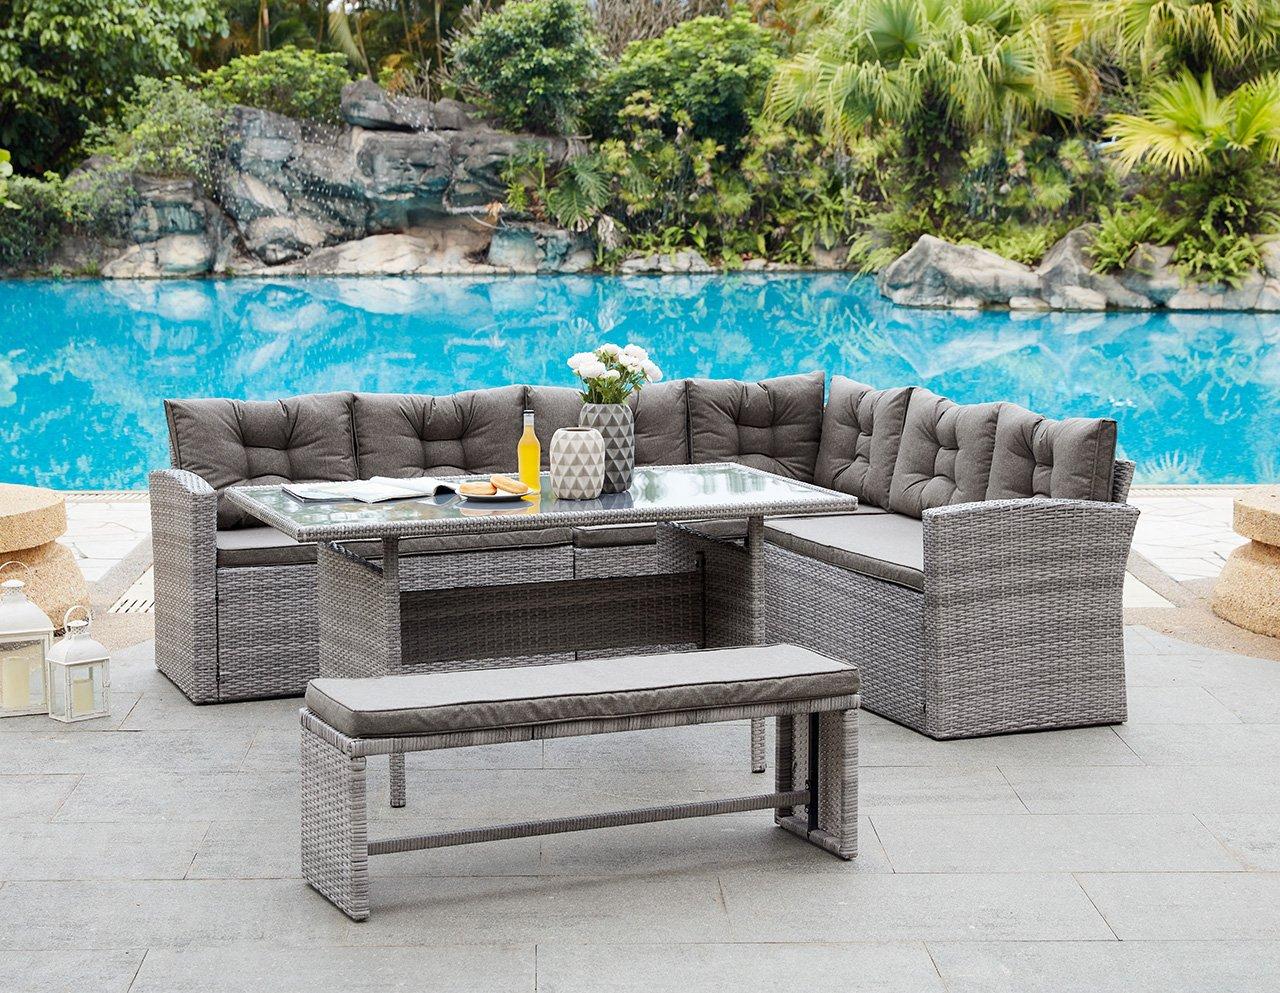 Madeira Rattan Corner Outdoor Dining Garden Furniture Set Sofa Table & Bench